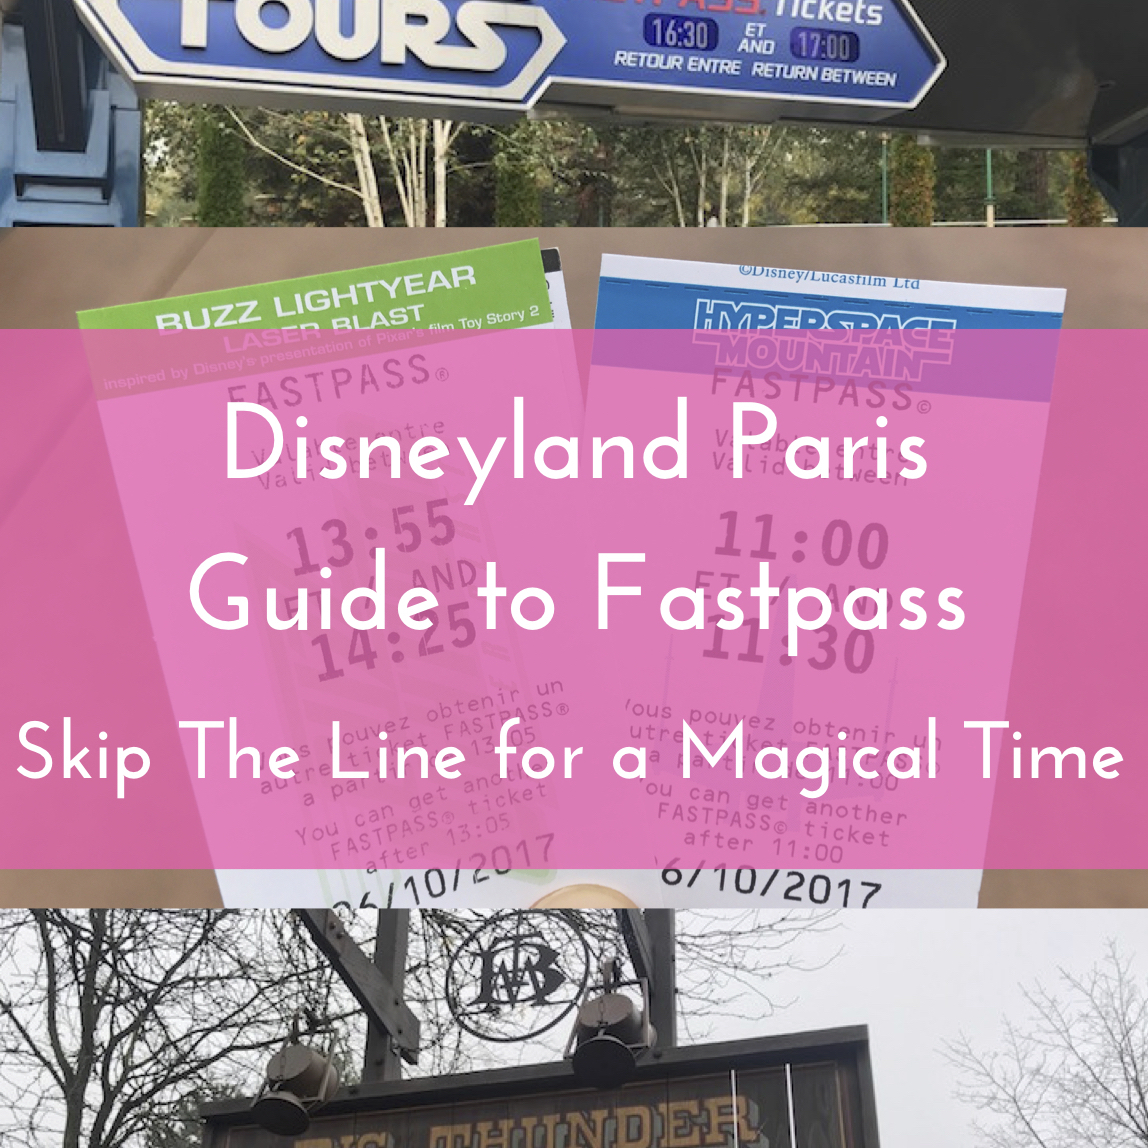 Reemplazo del Fastpass de Disneyland París